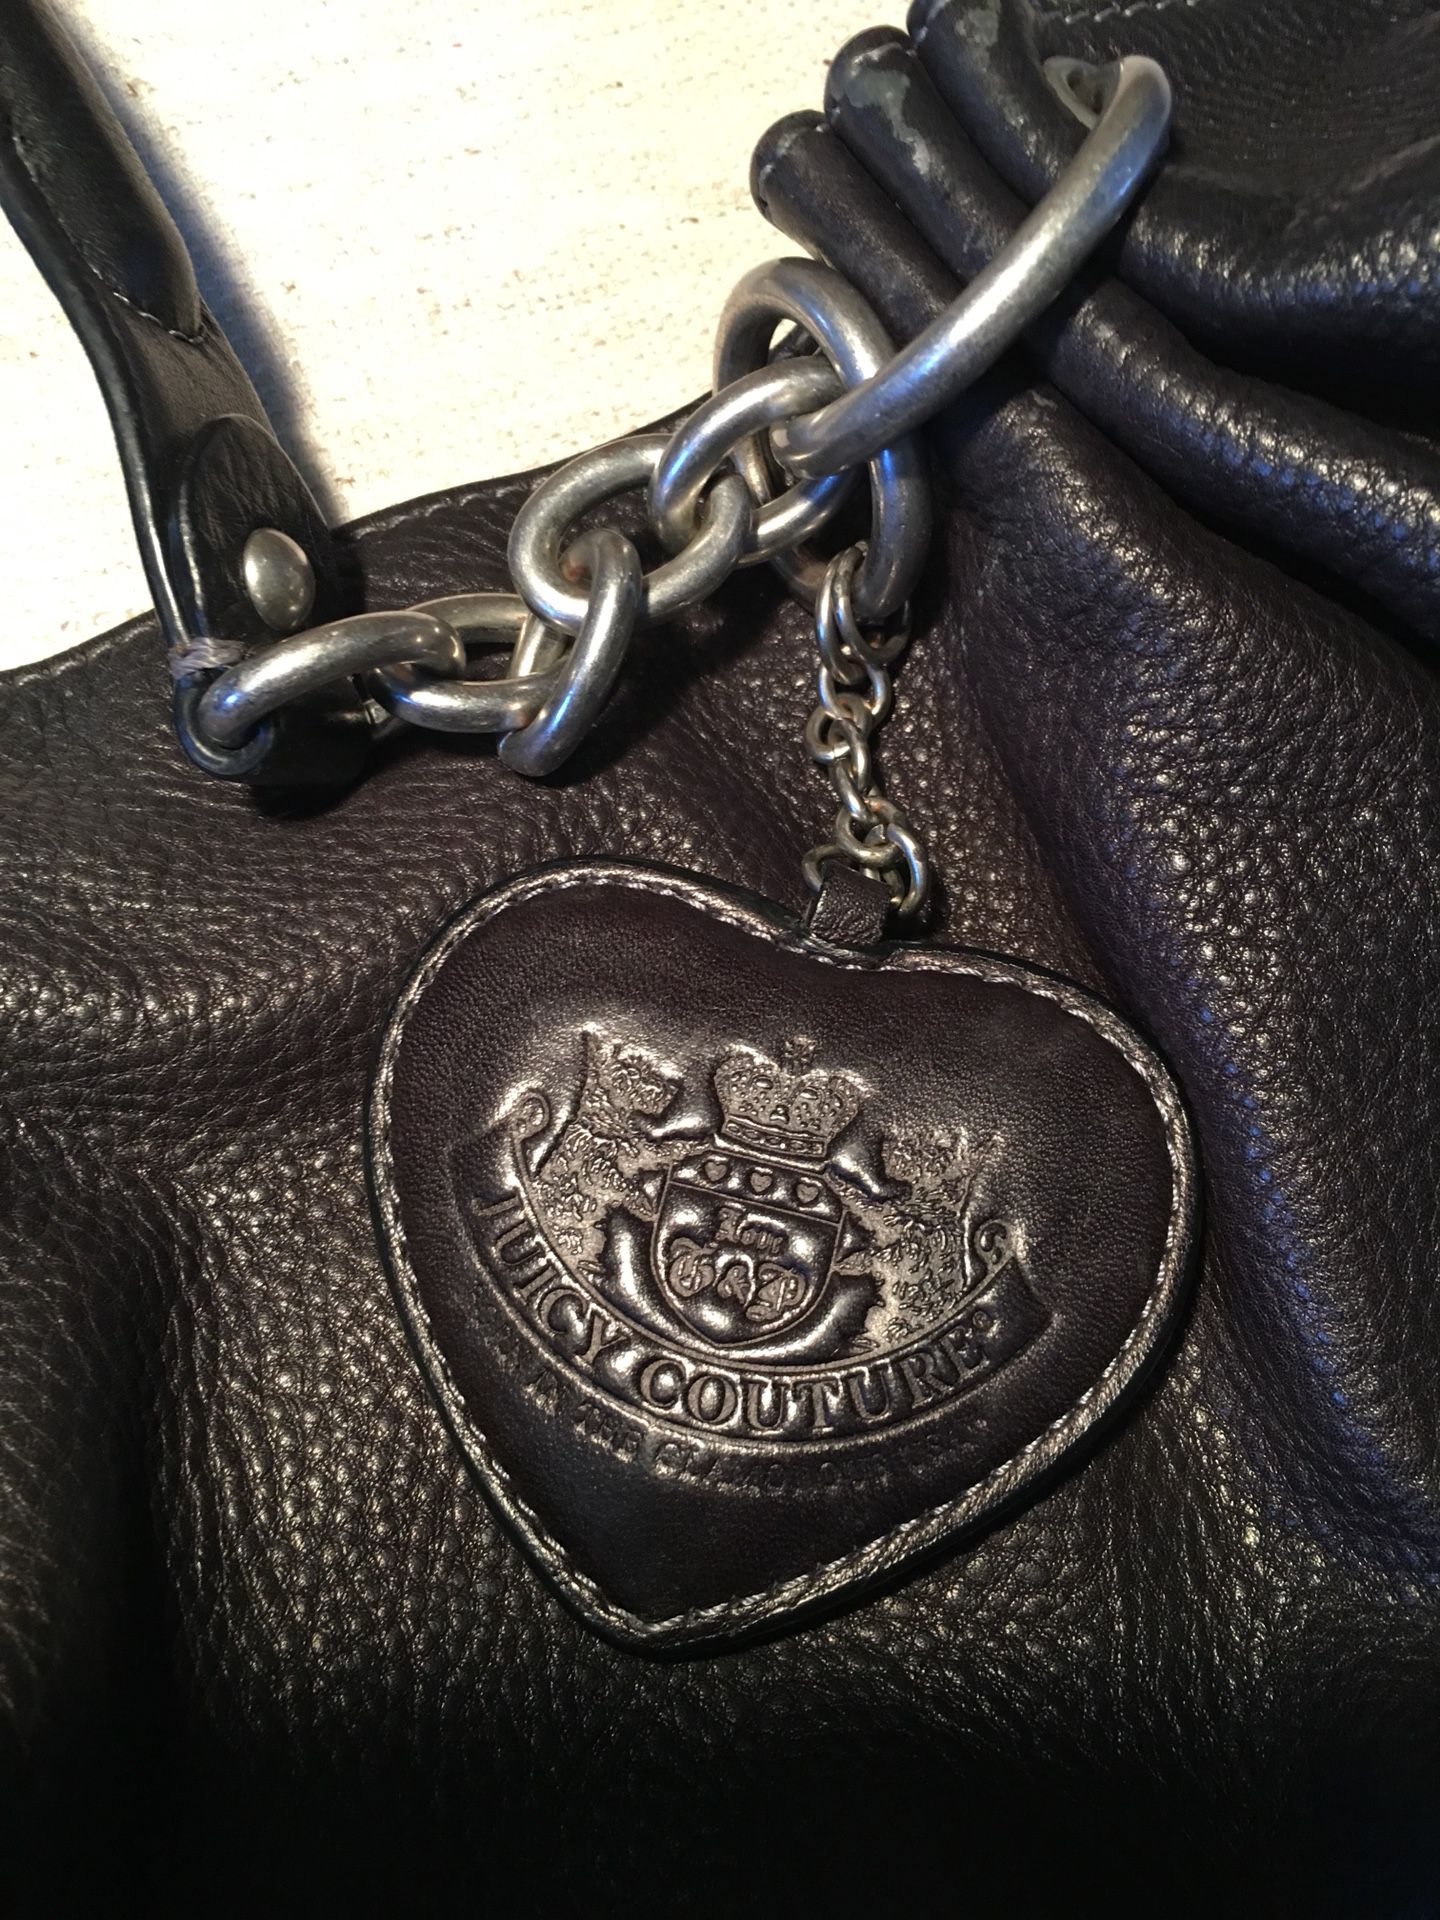 GORGEOUS, supple leather Juicy Cotoure handbag, tote!